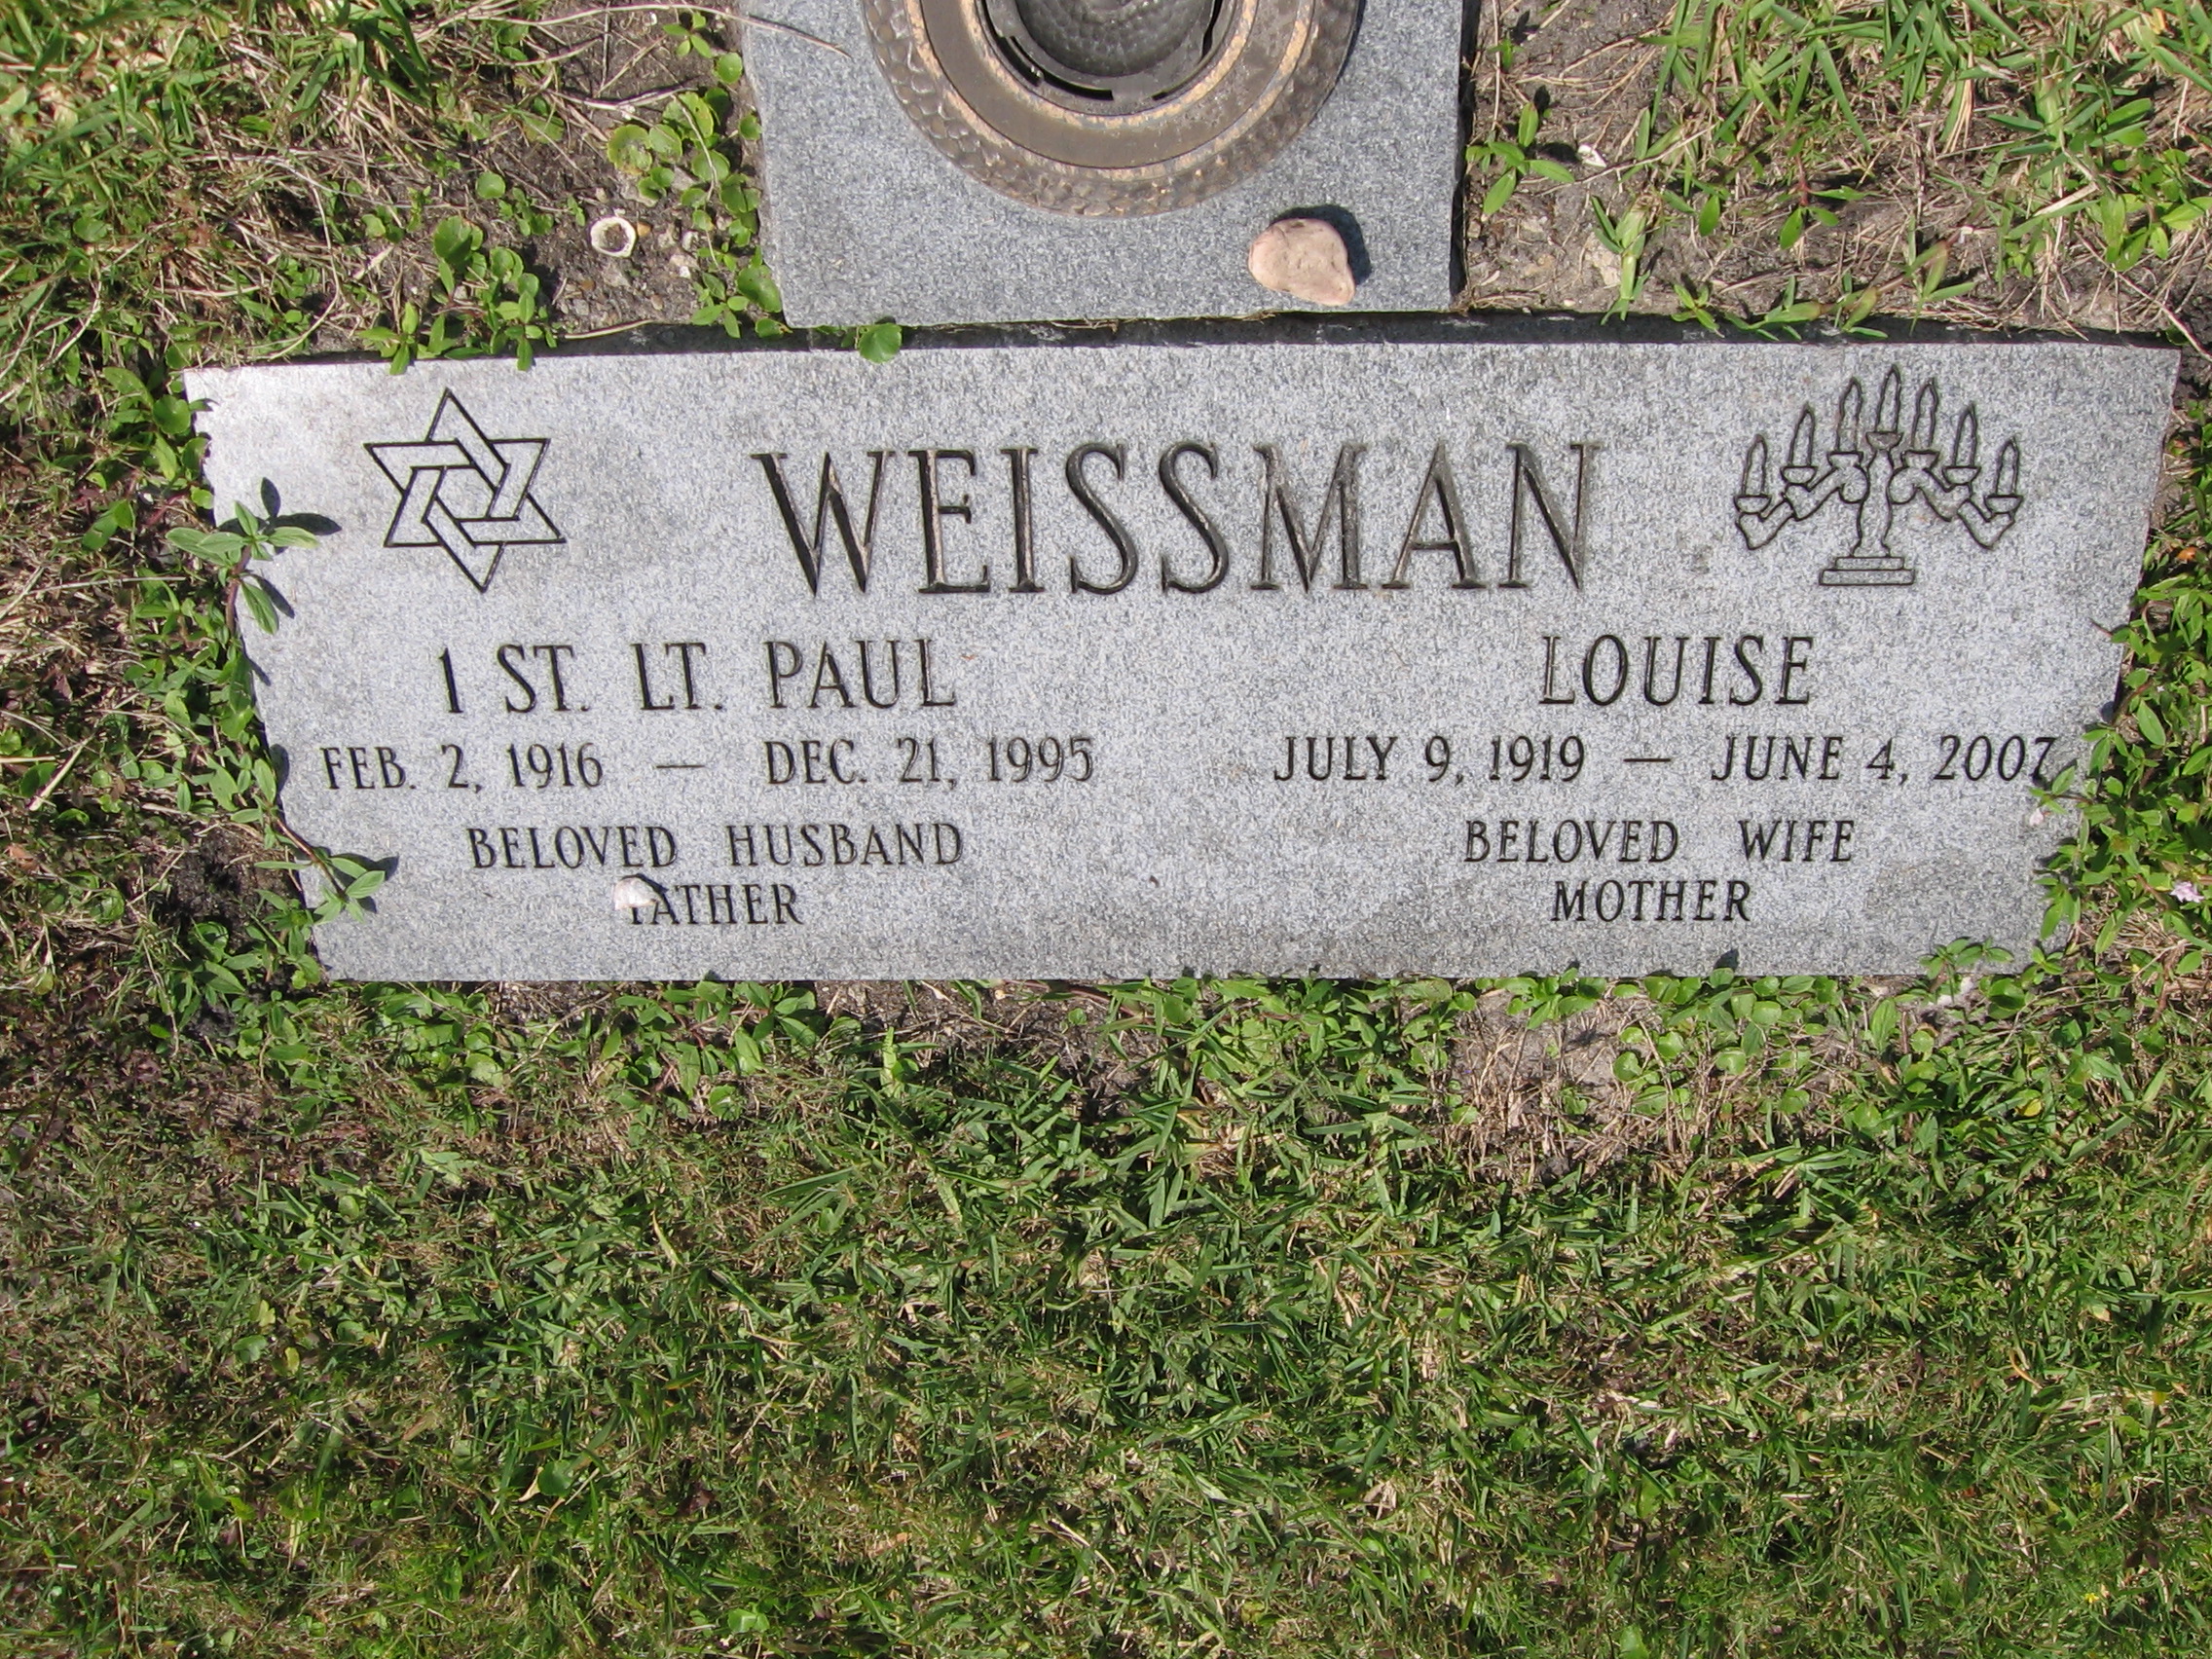 Louise Weissman